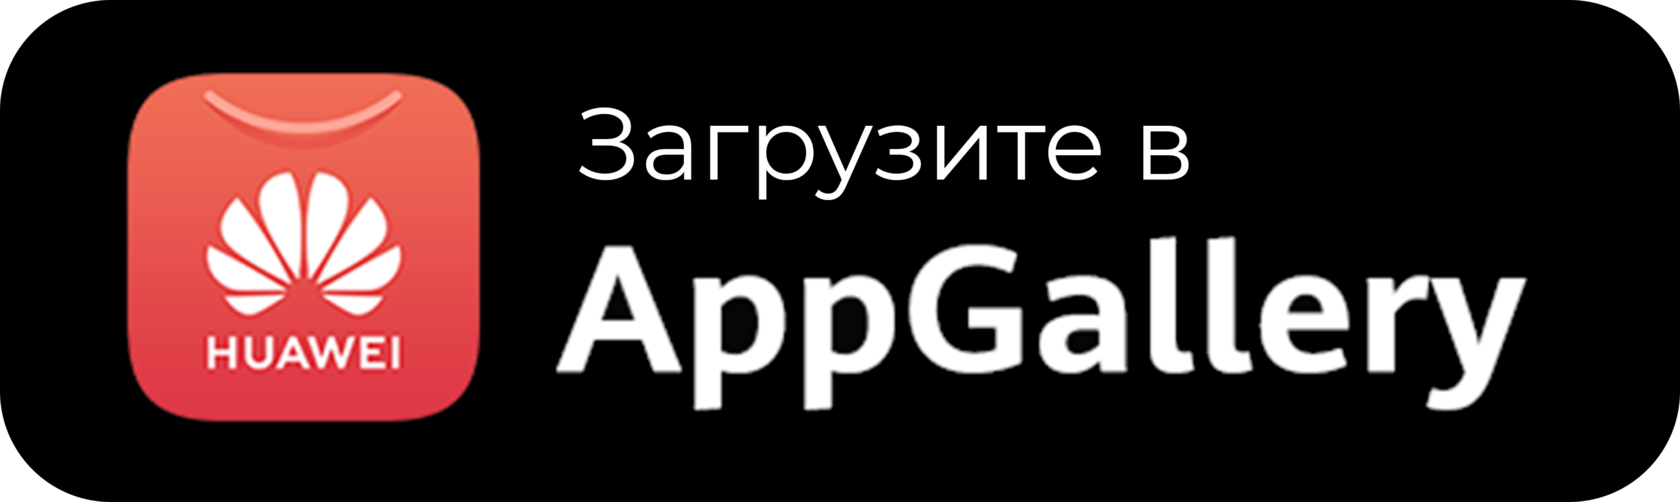 App logo png. App Gallery логотип. Доступно в app Gallery. Huawei app Gallery значок. Загрузите в app Gallery.